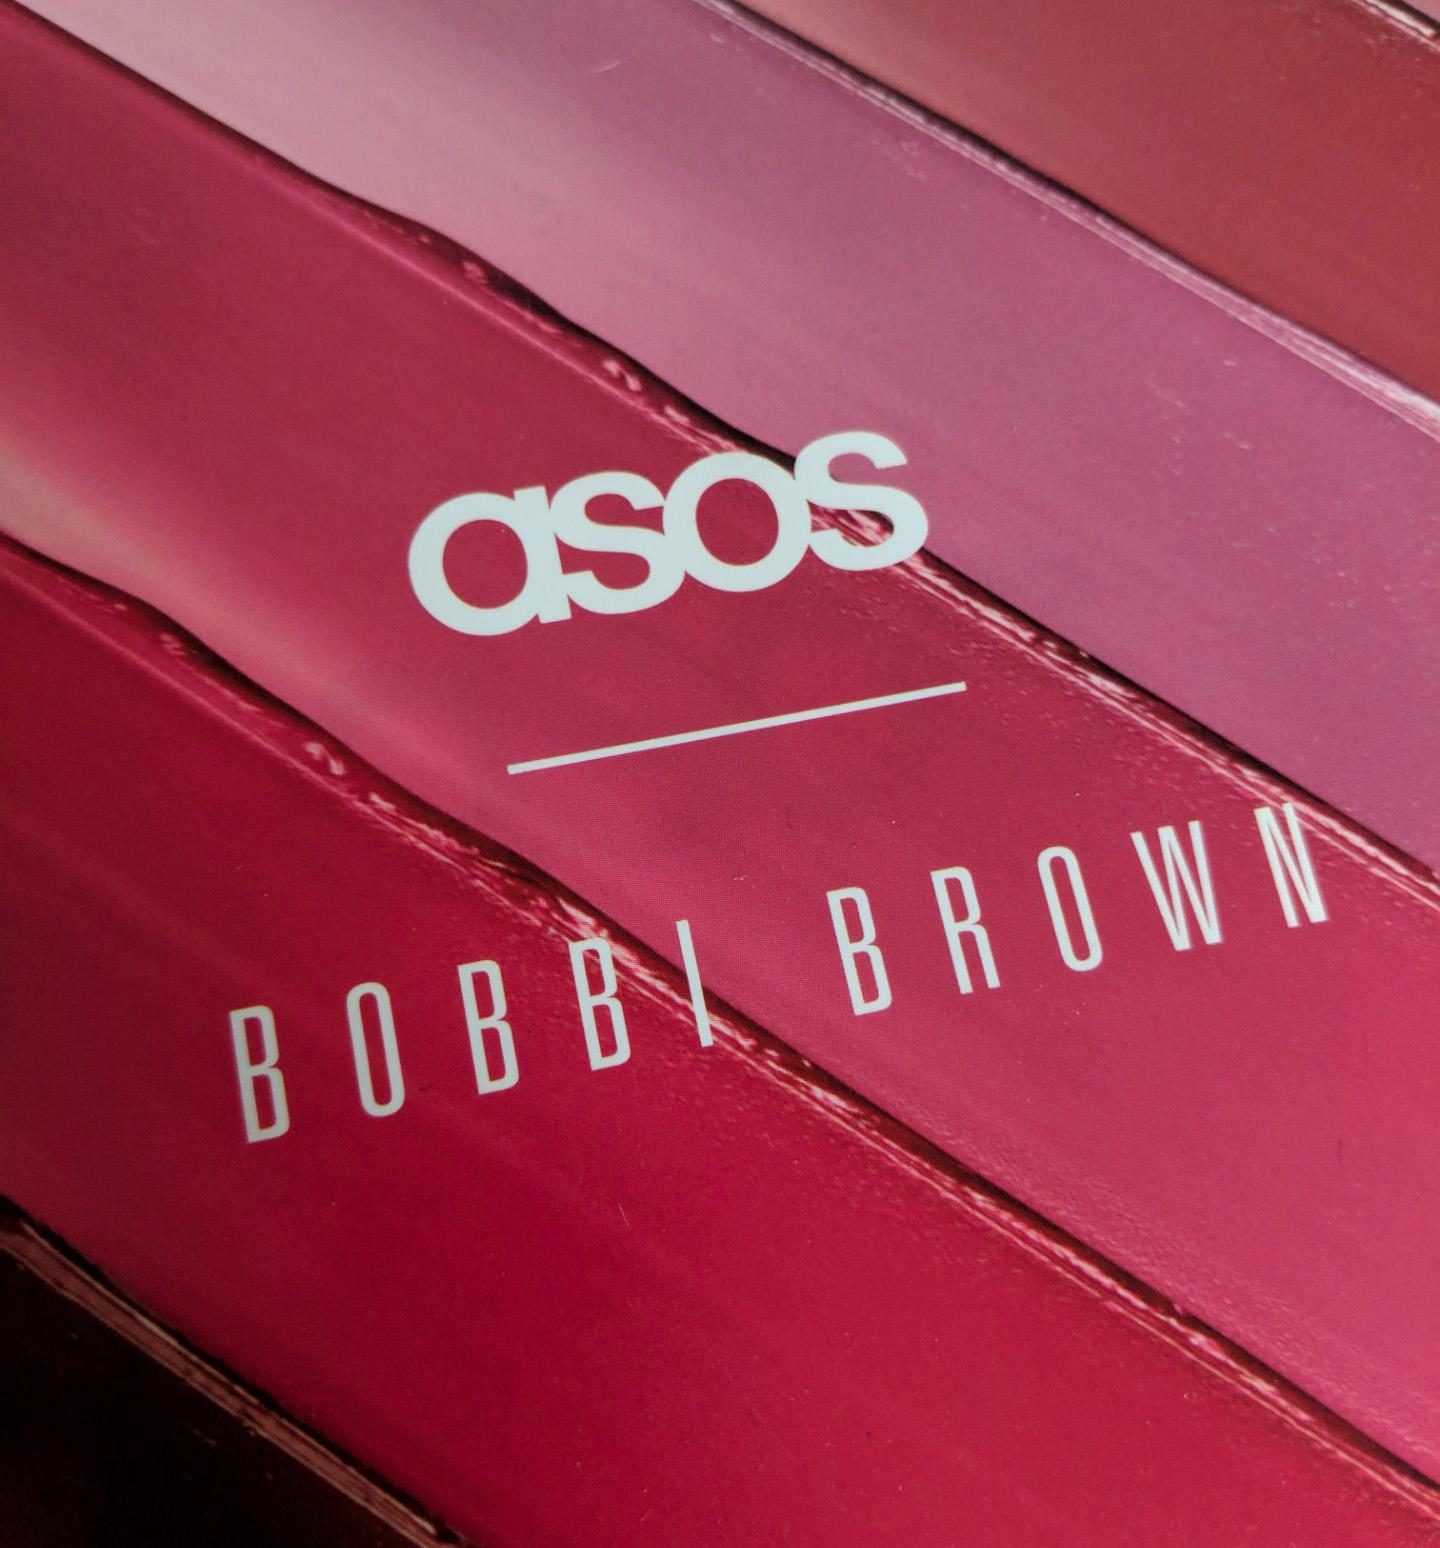 ASOS Bobbi Brown Box